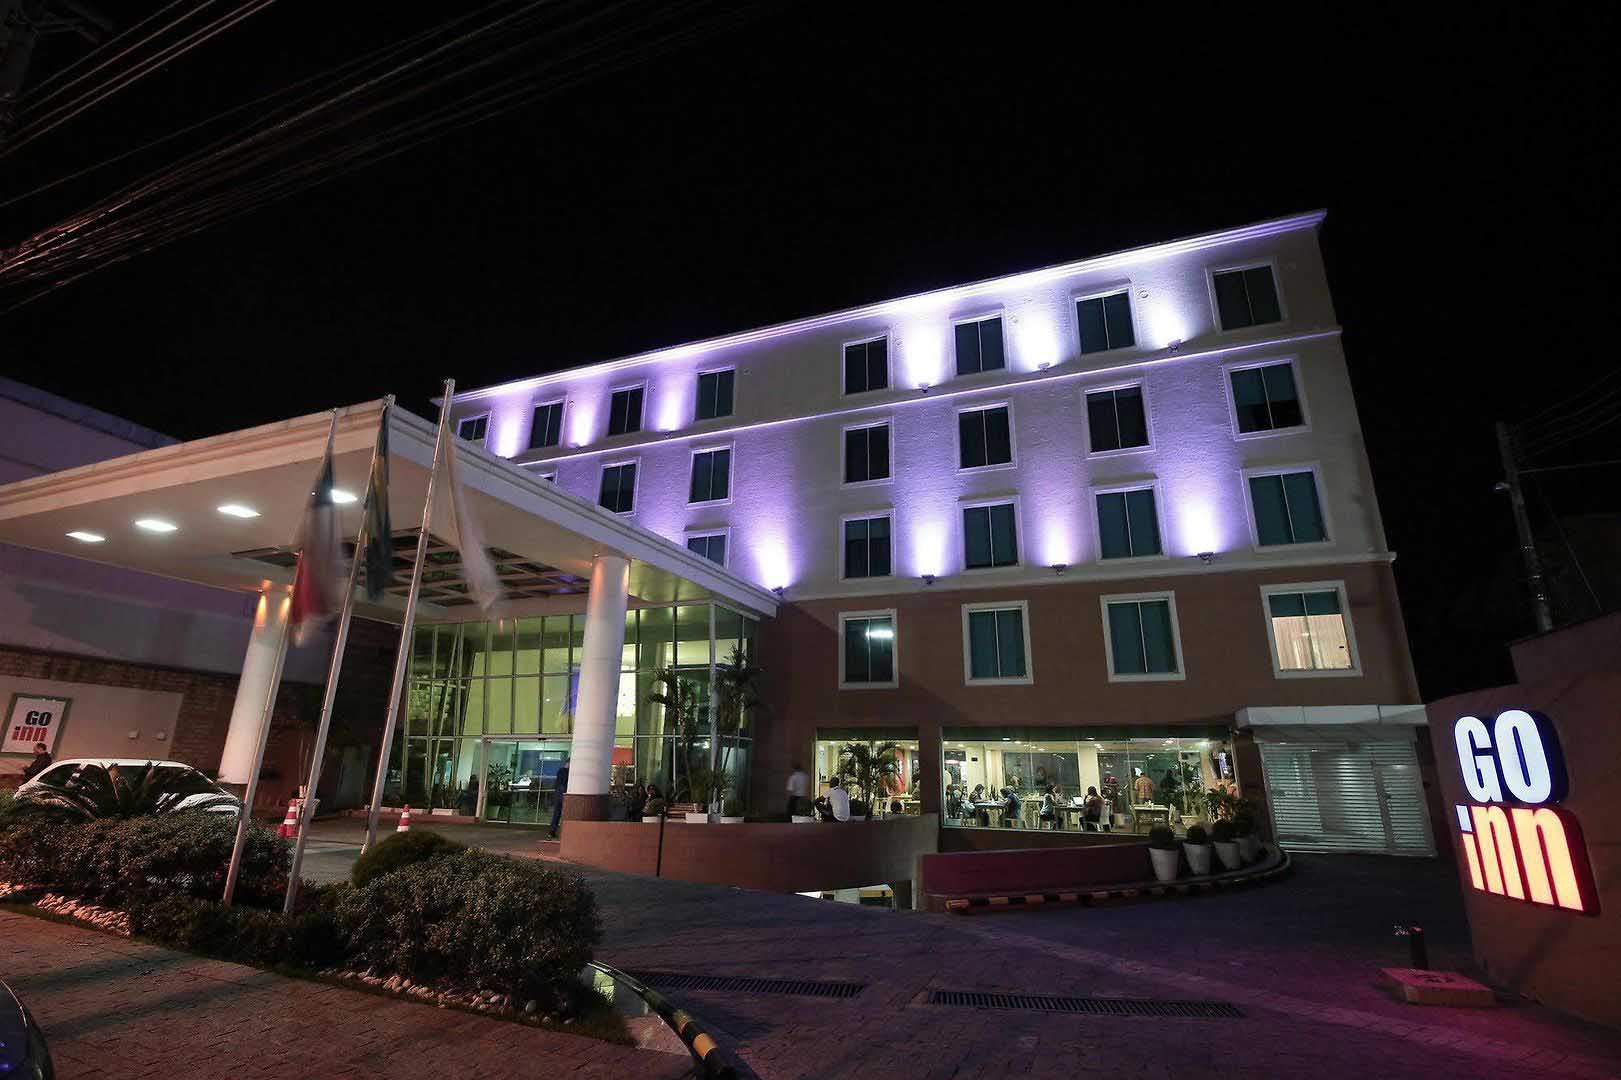 Hotel Go Inn Manaus